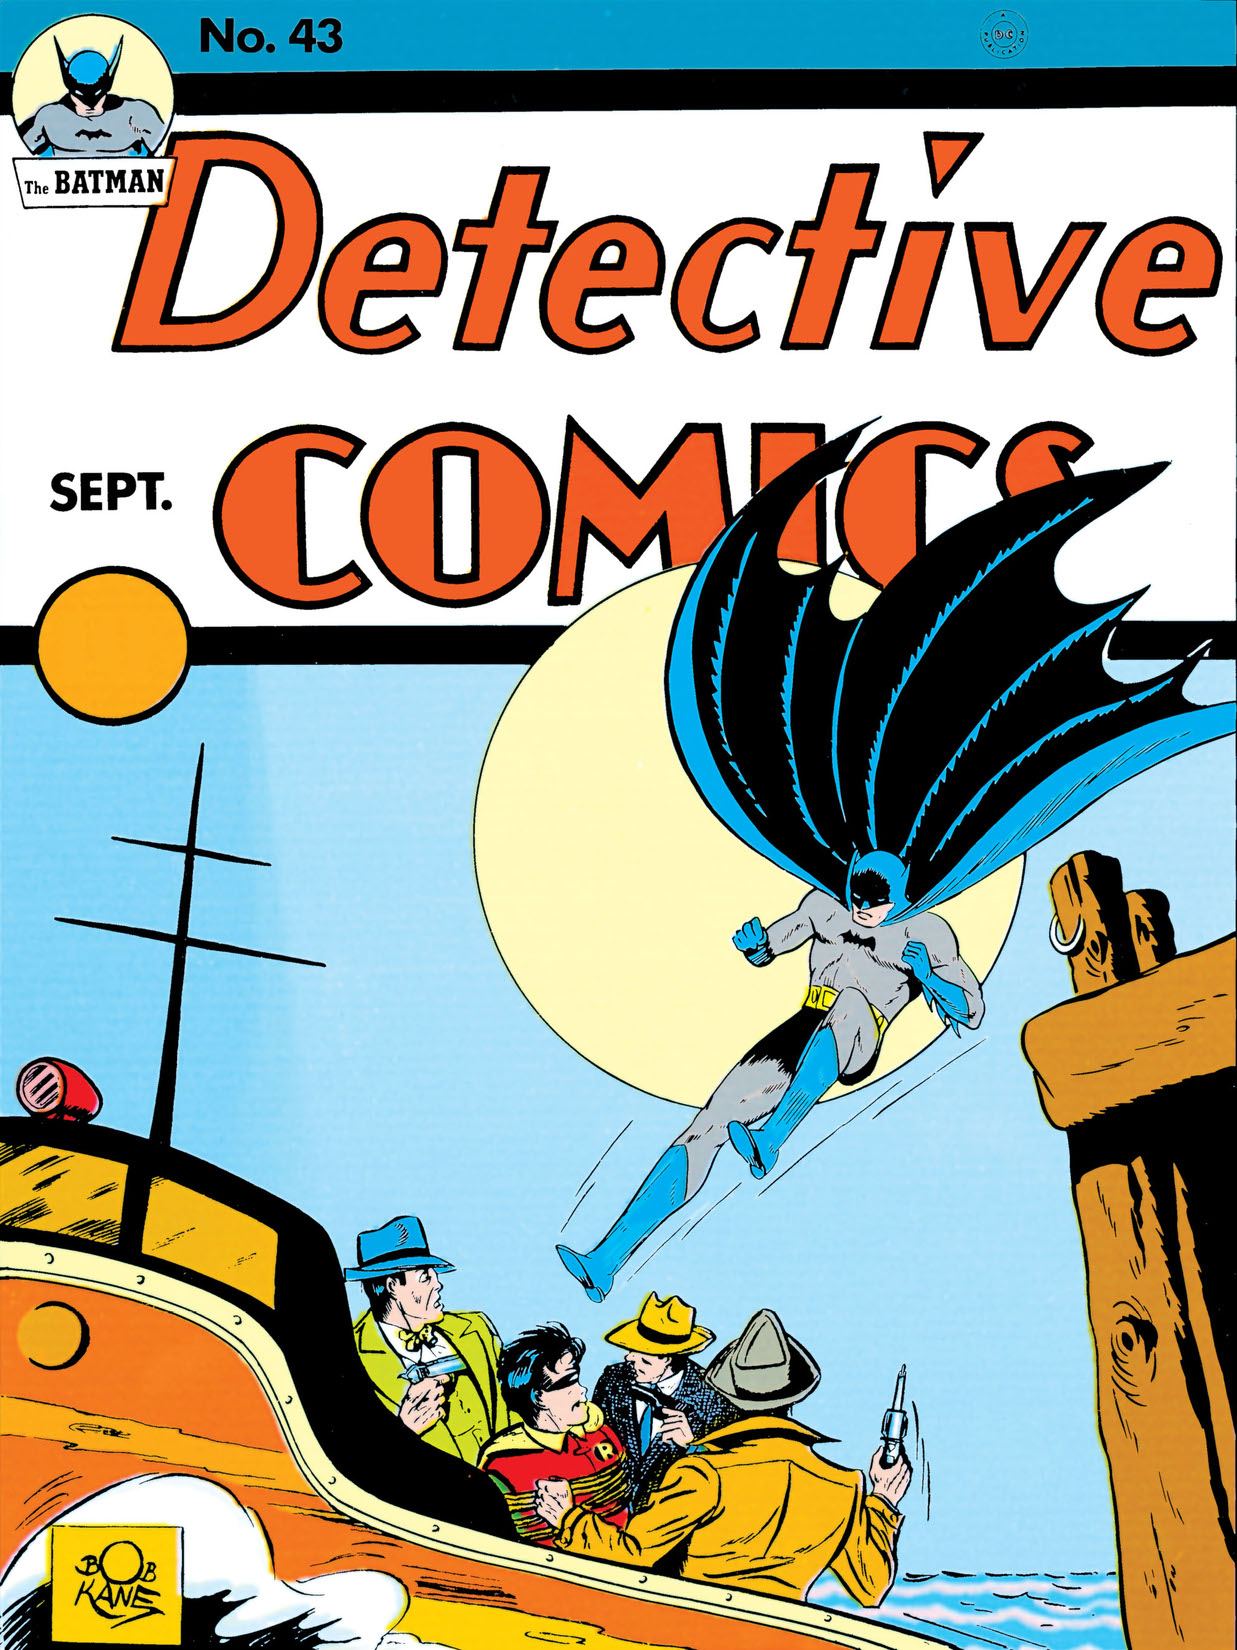 Detective Comics (1937-) #43 preview images